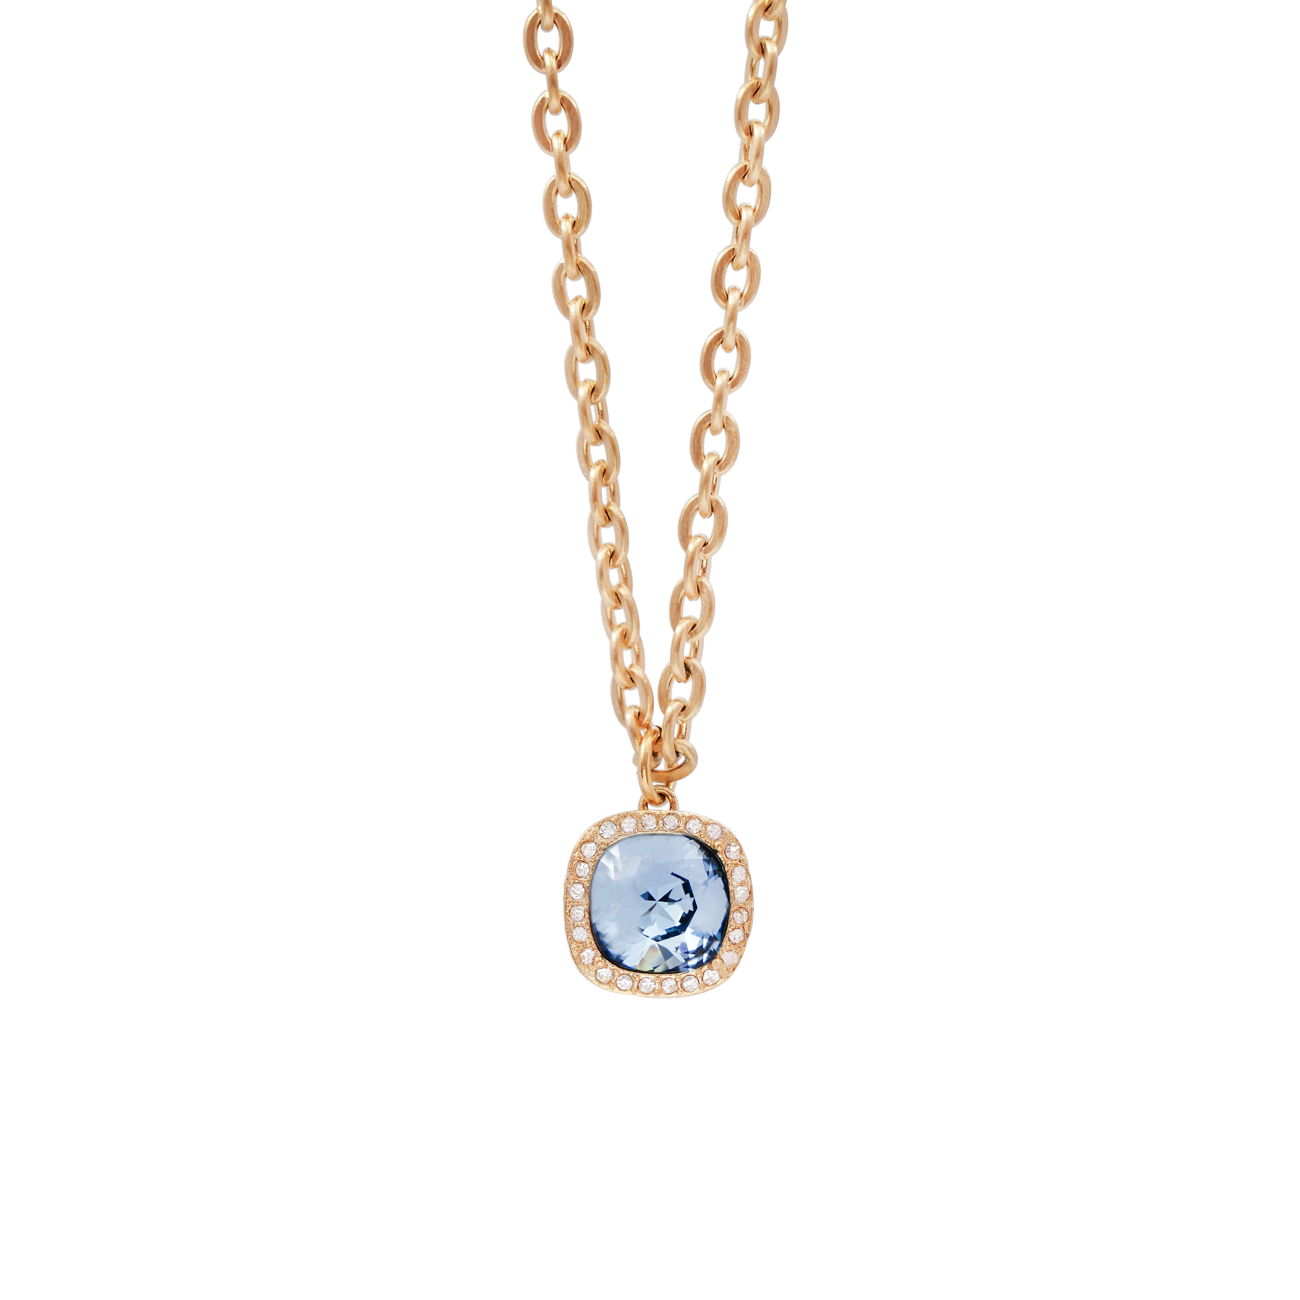 Tamara Crystal chain necklace - Denim blue/Clear